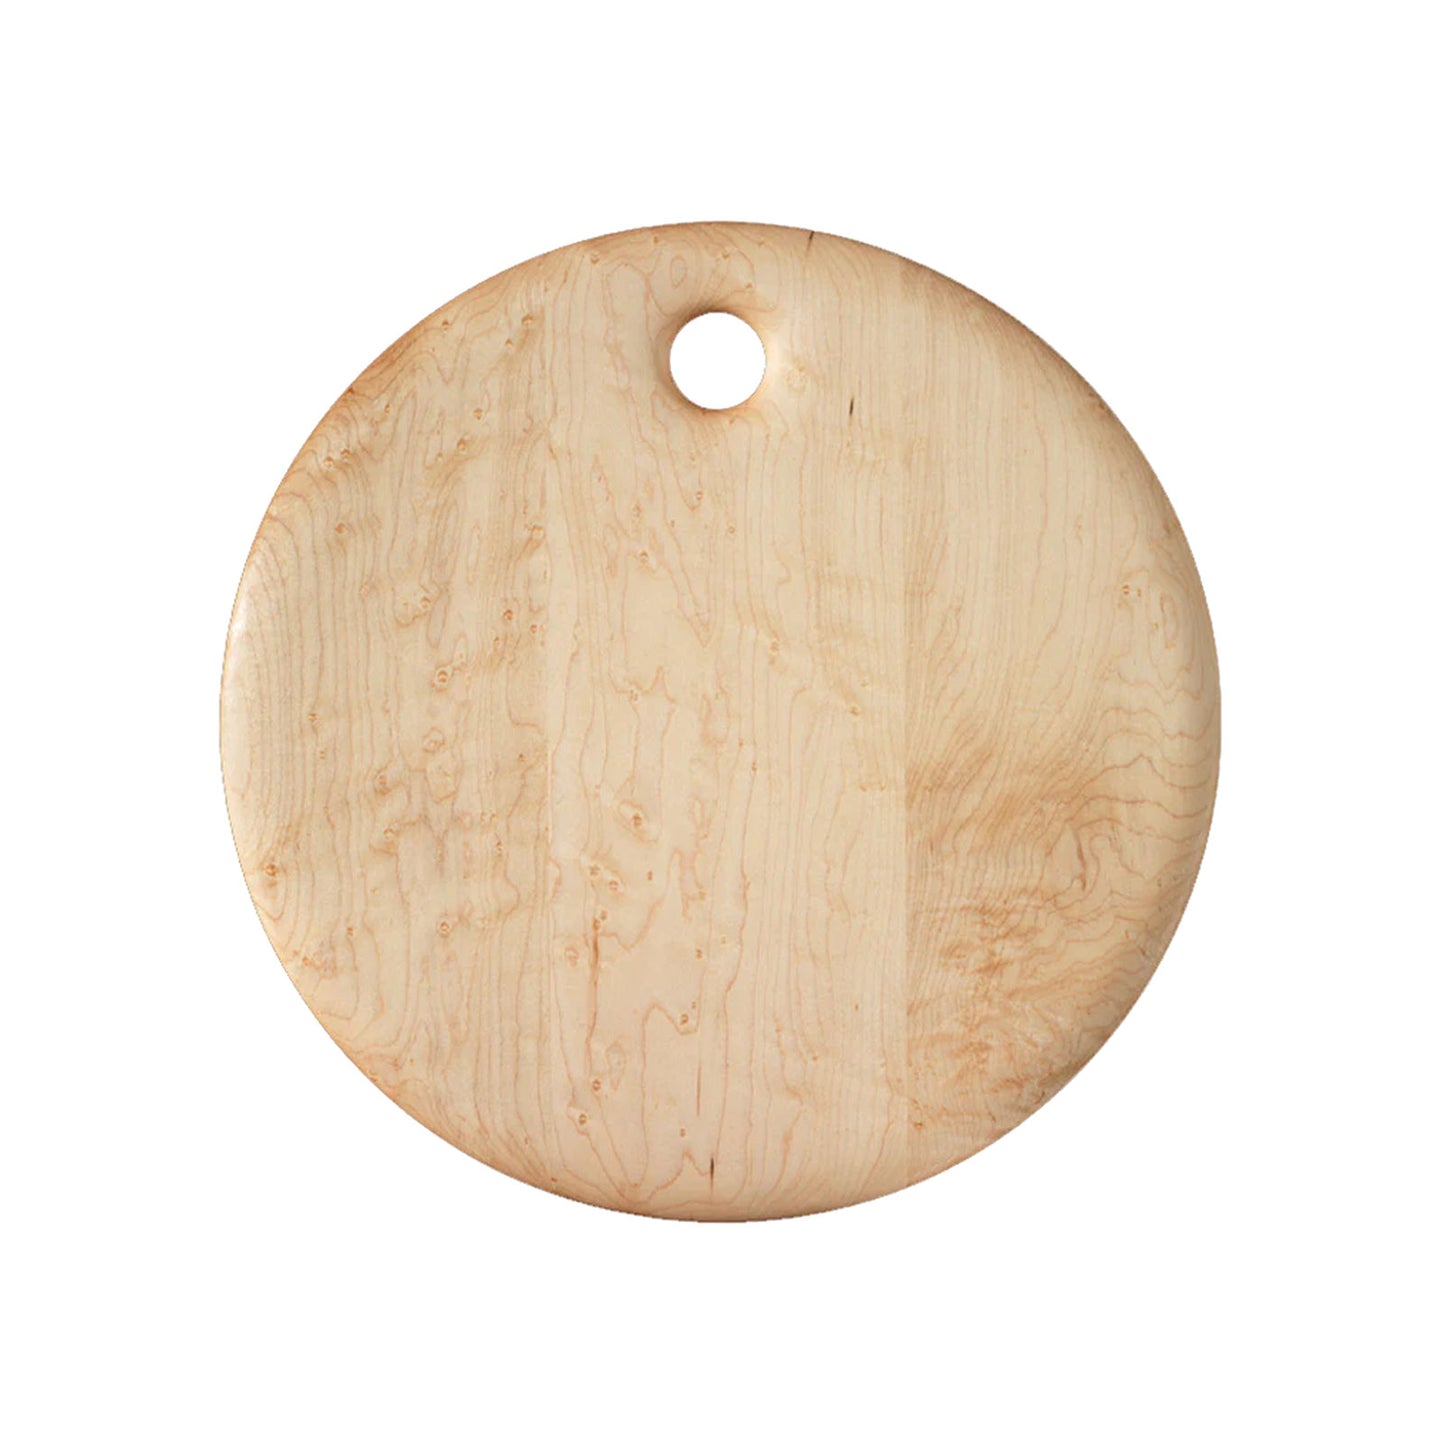 Maple Wood Cutting Board #038 - Grandma's Kitchen —